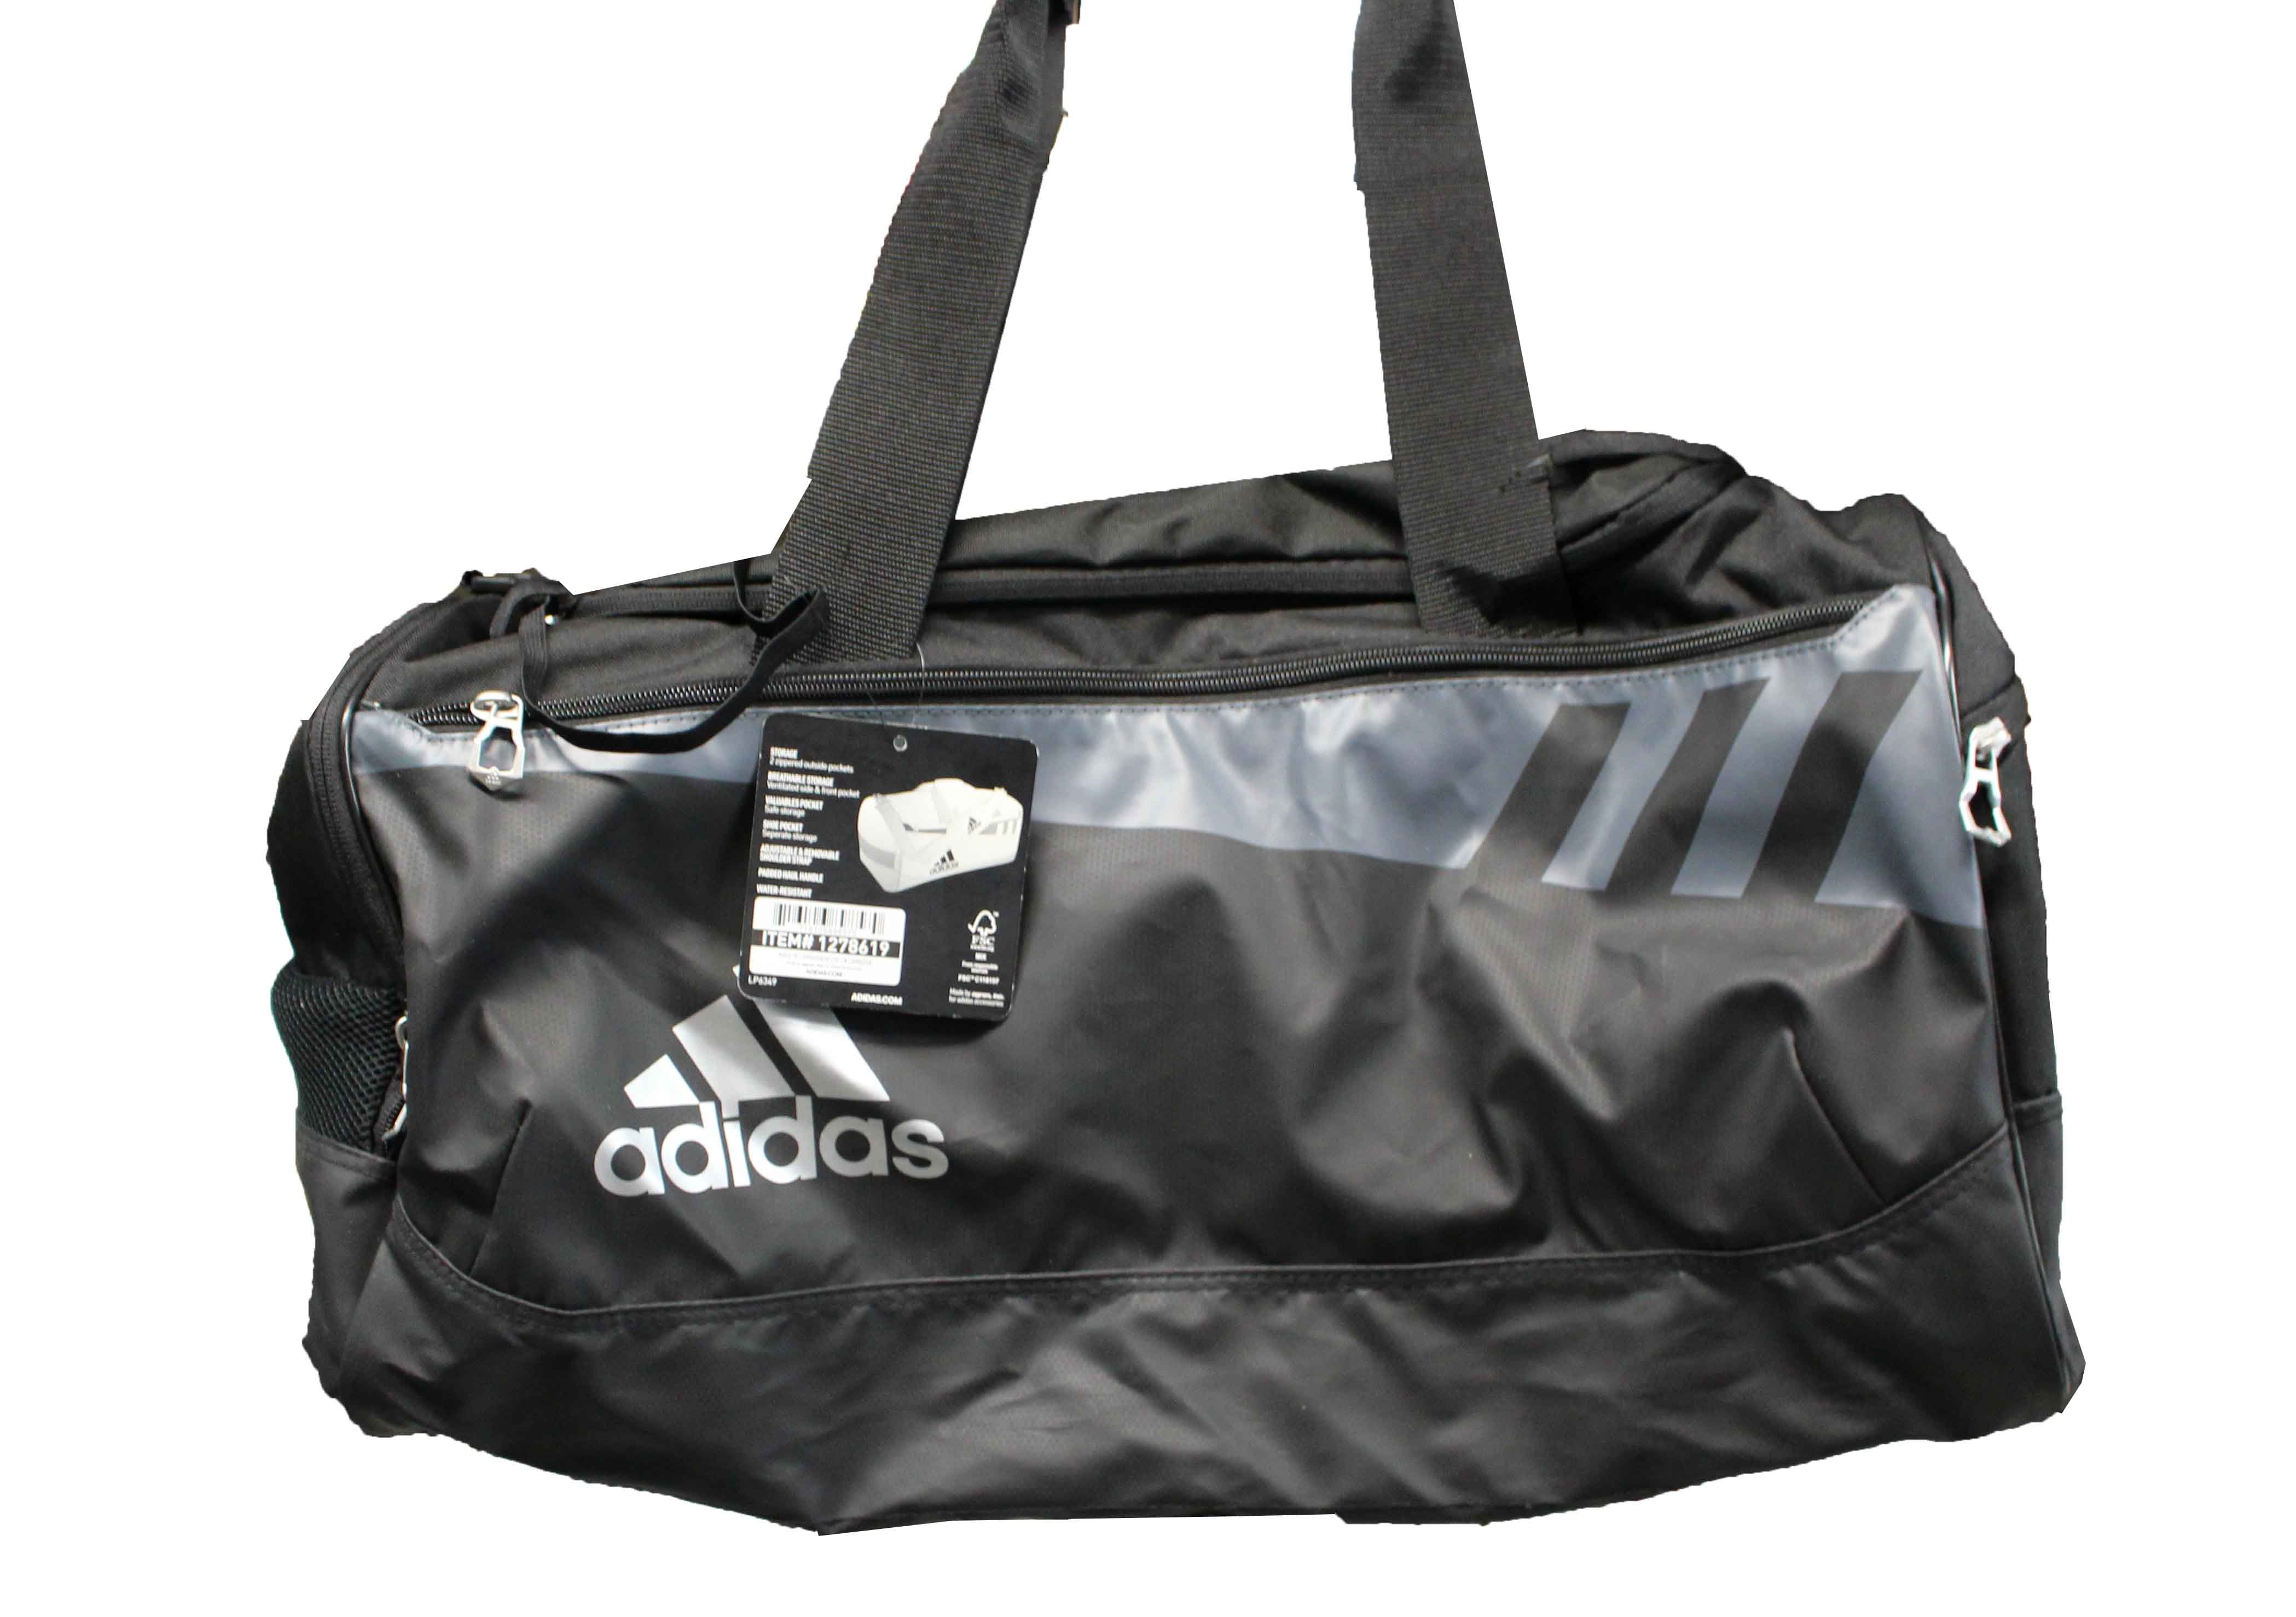 adidas training convertible top team bag